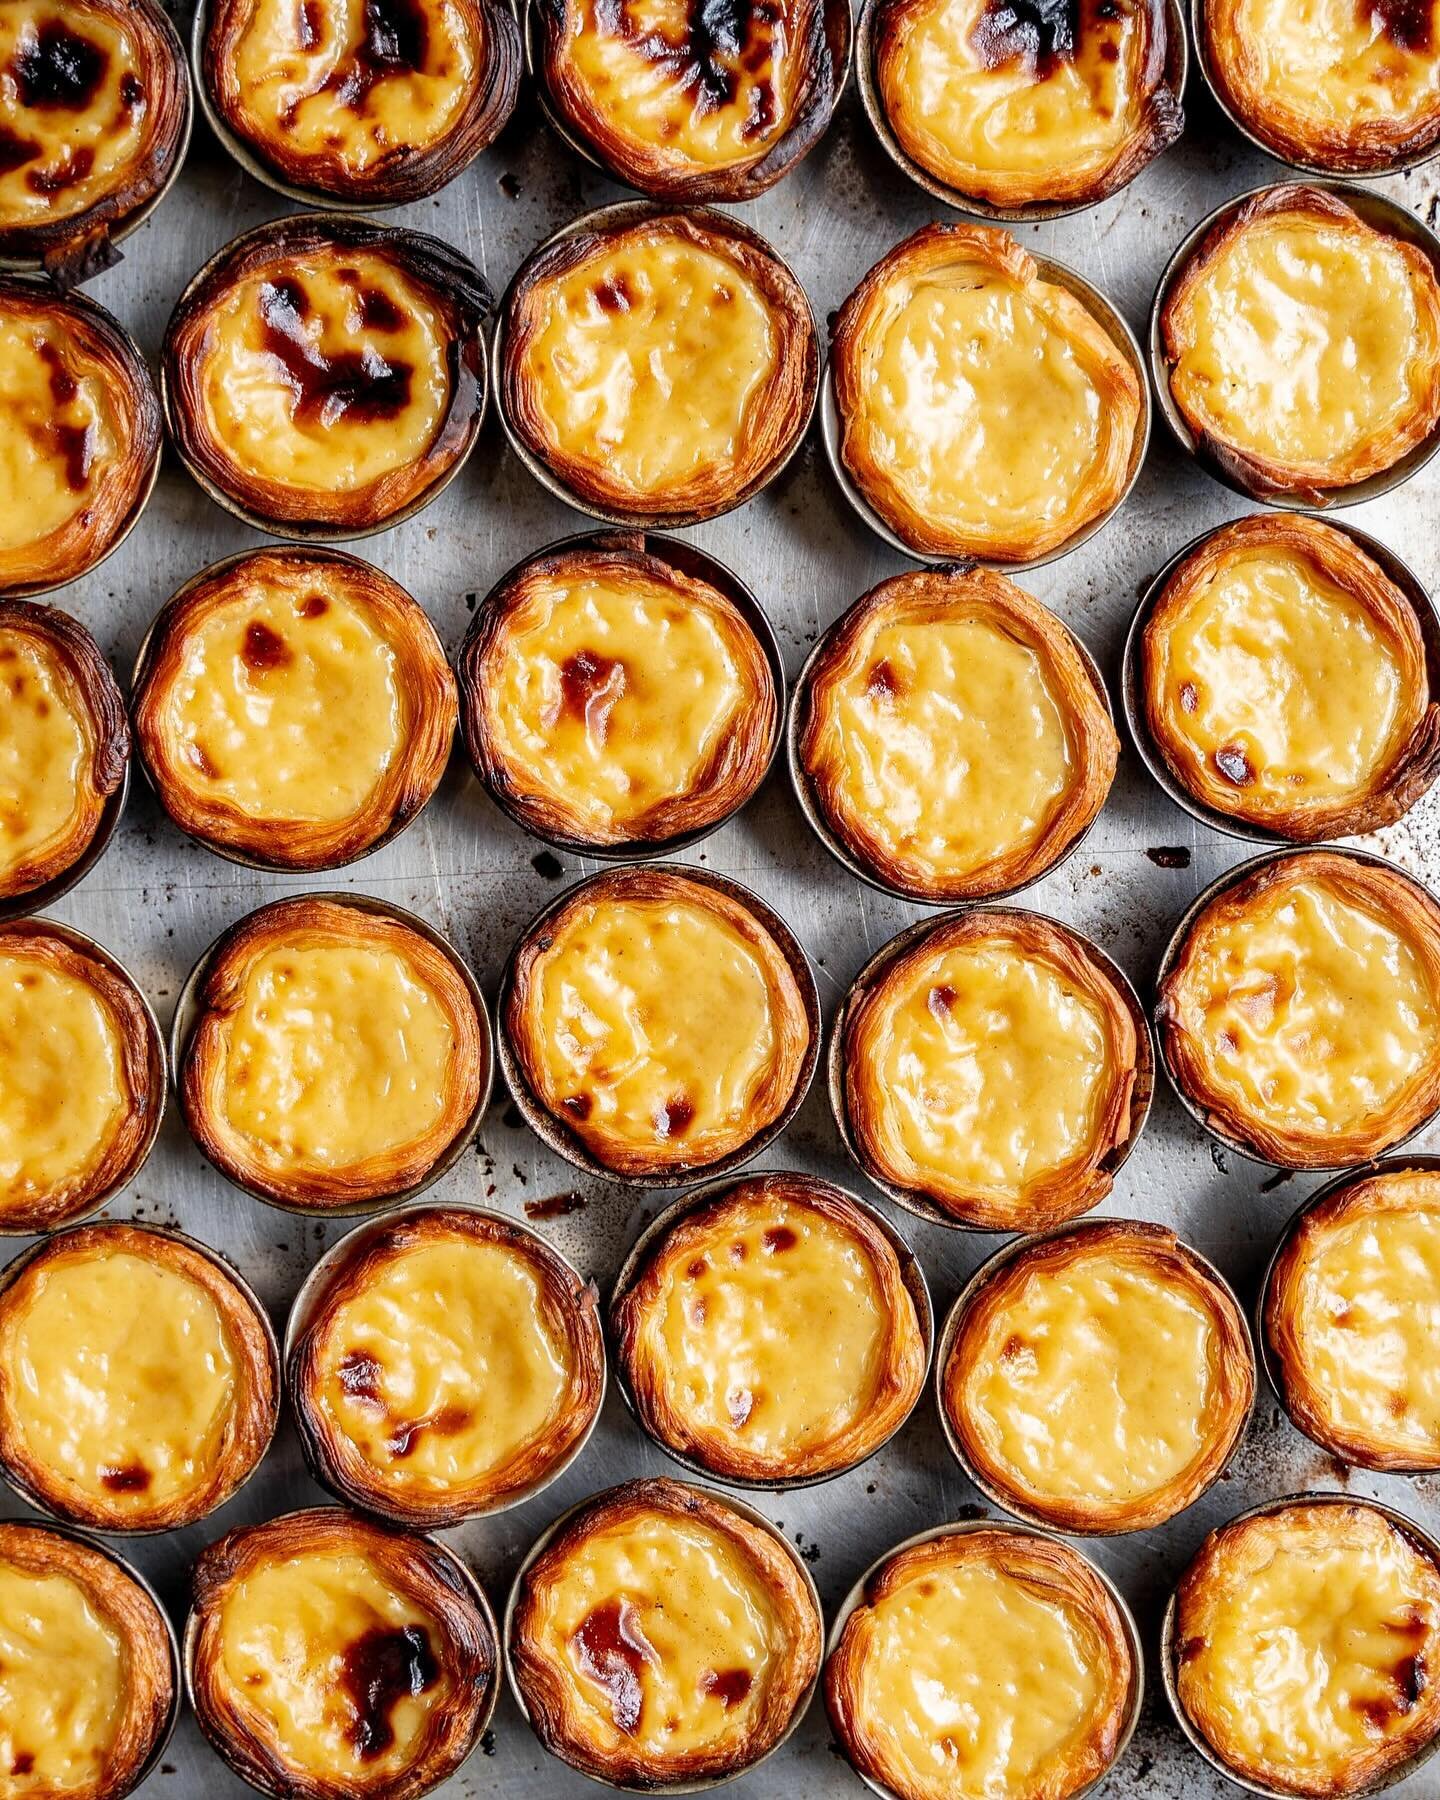 All the #sweetbelem tarts waiting. 

Come see us @sweetbelemcakeboutique x @fich_at_petersham x @lunas.petersham 

All open today

#sweetbelem #sydneydesserts #sydneyfood #sydneyeats #sydneyfoodies #feelnewsydney